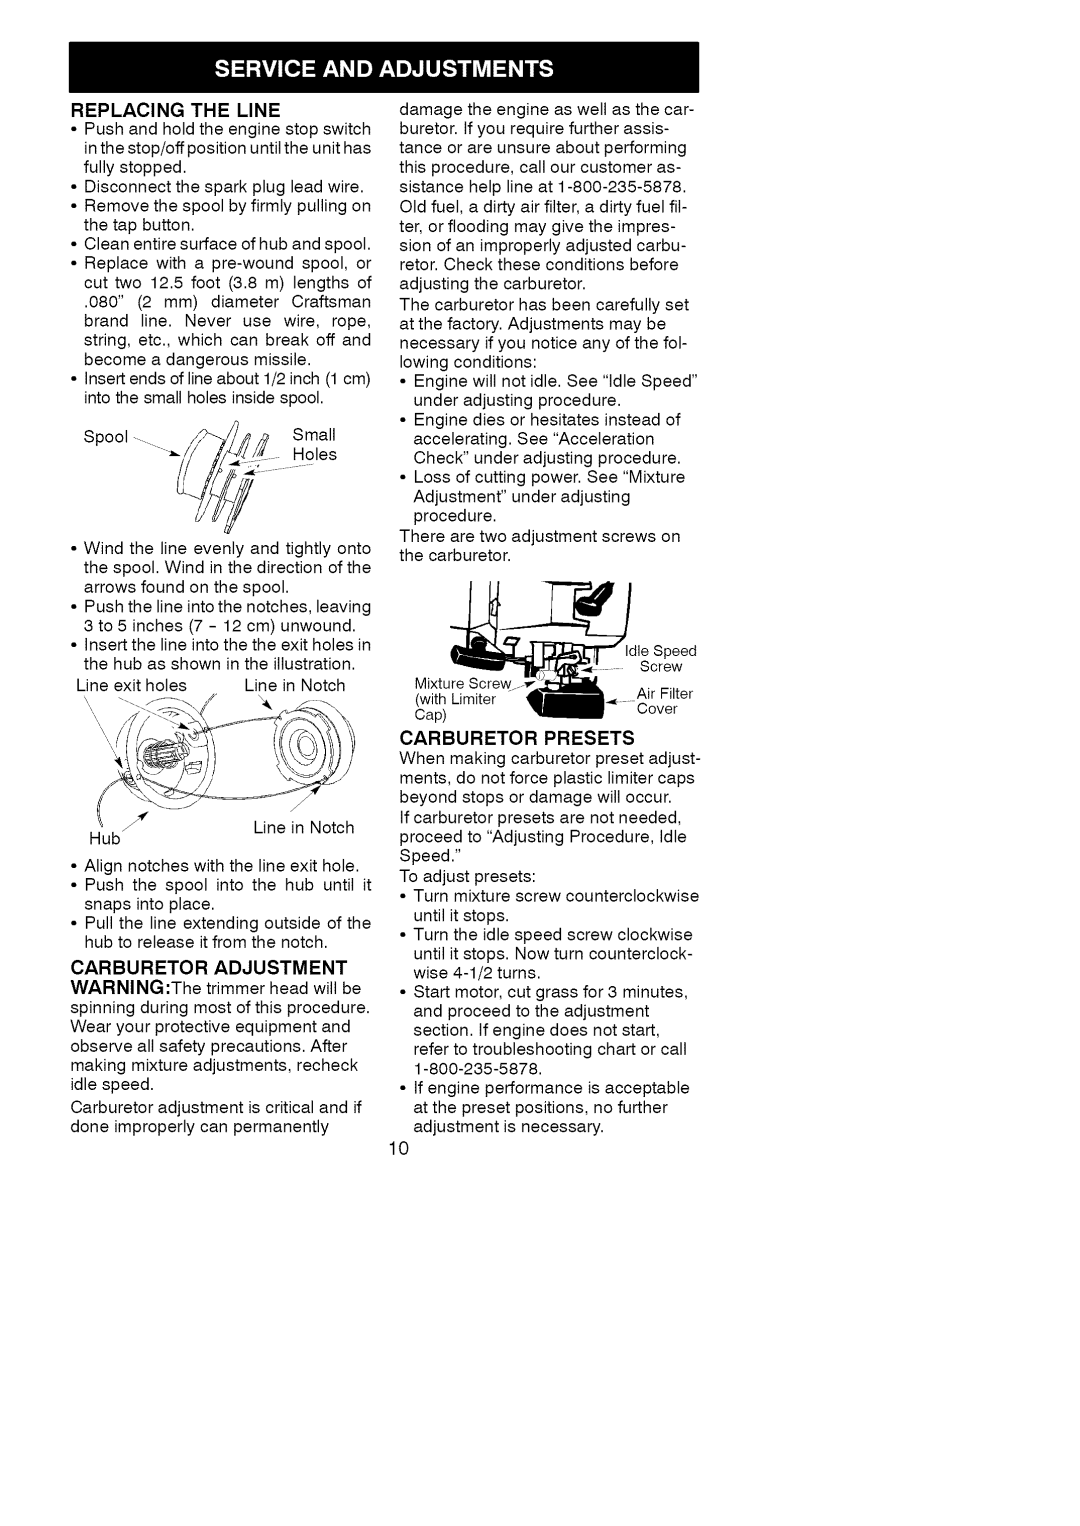 Craftsman 358.79821 manual Replacing The Line, Presets 